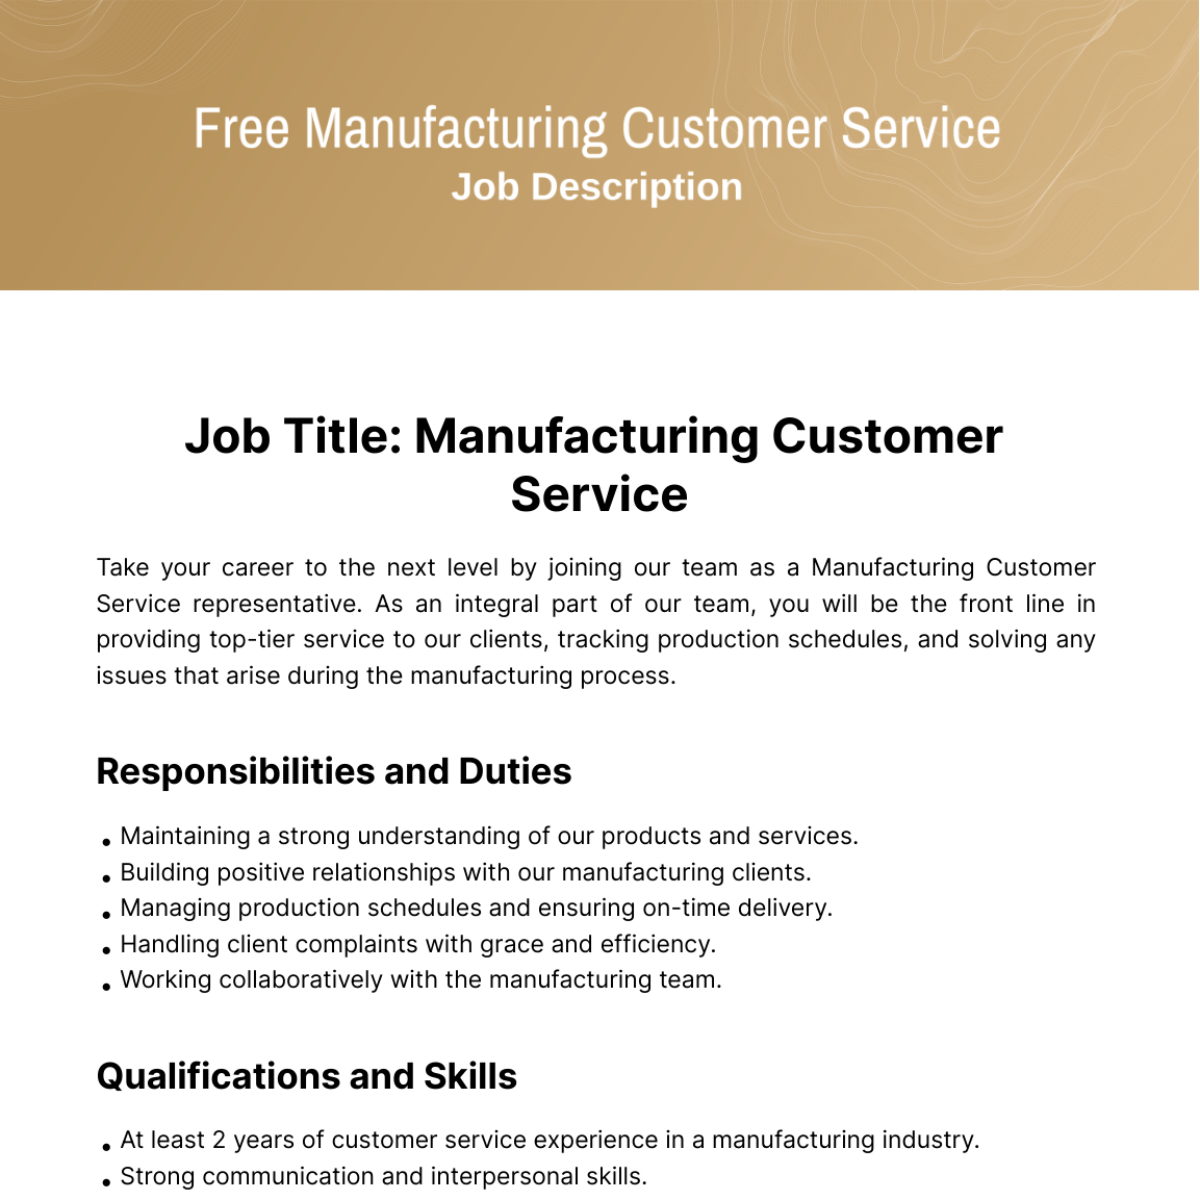 Manufacturing Customer Service Job Description Template